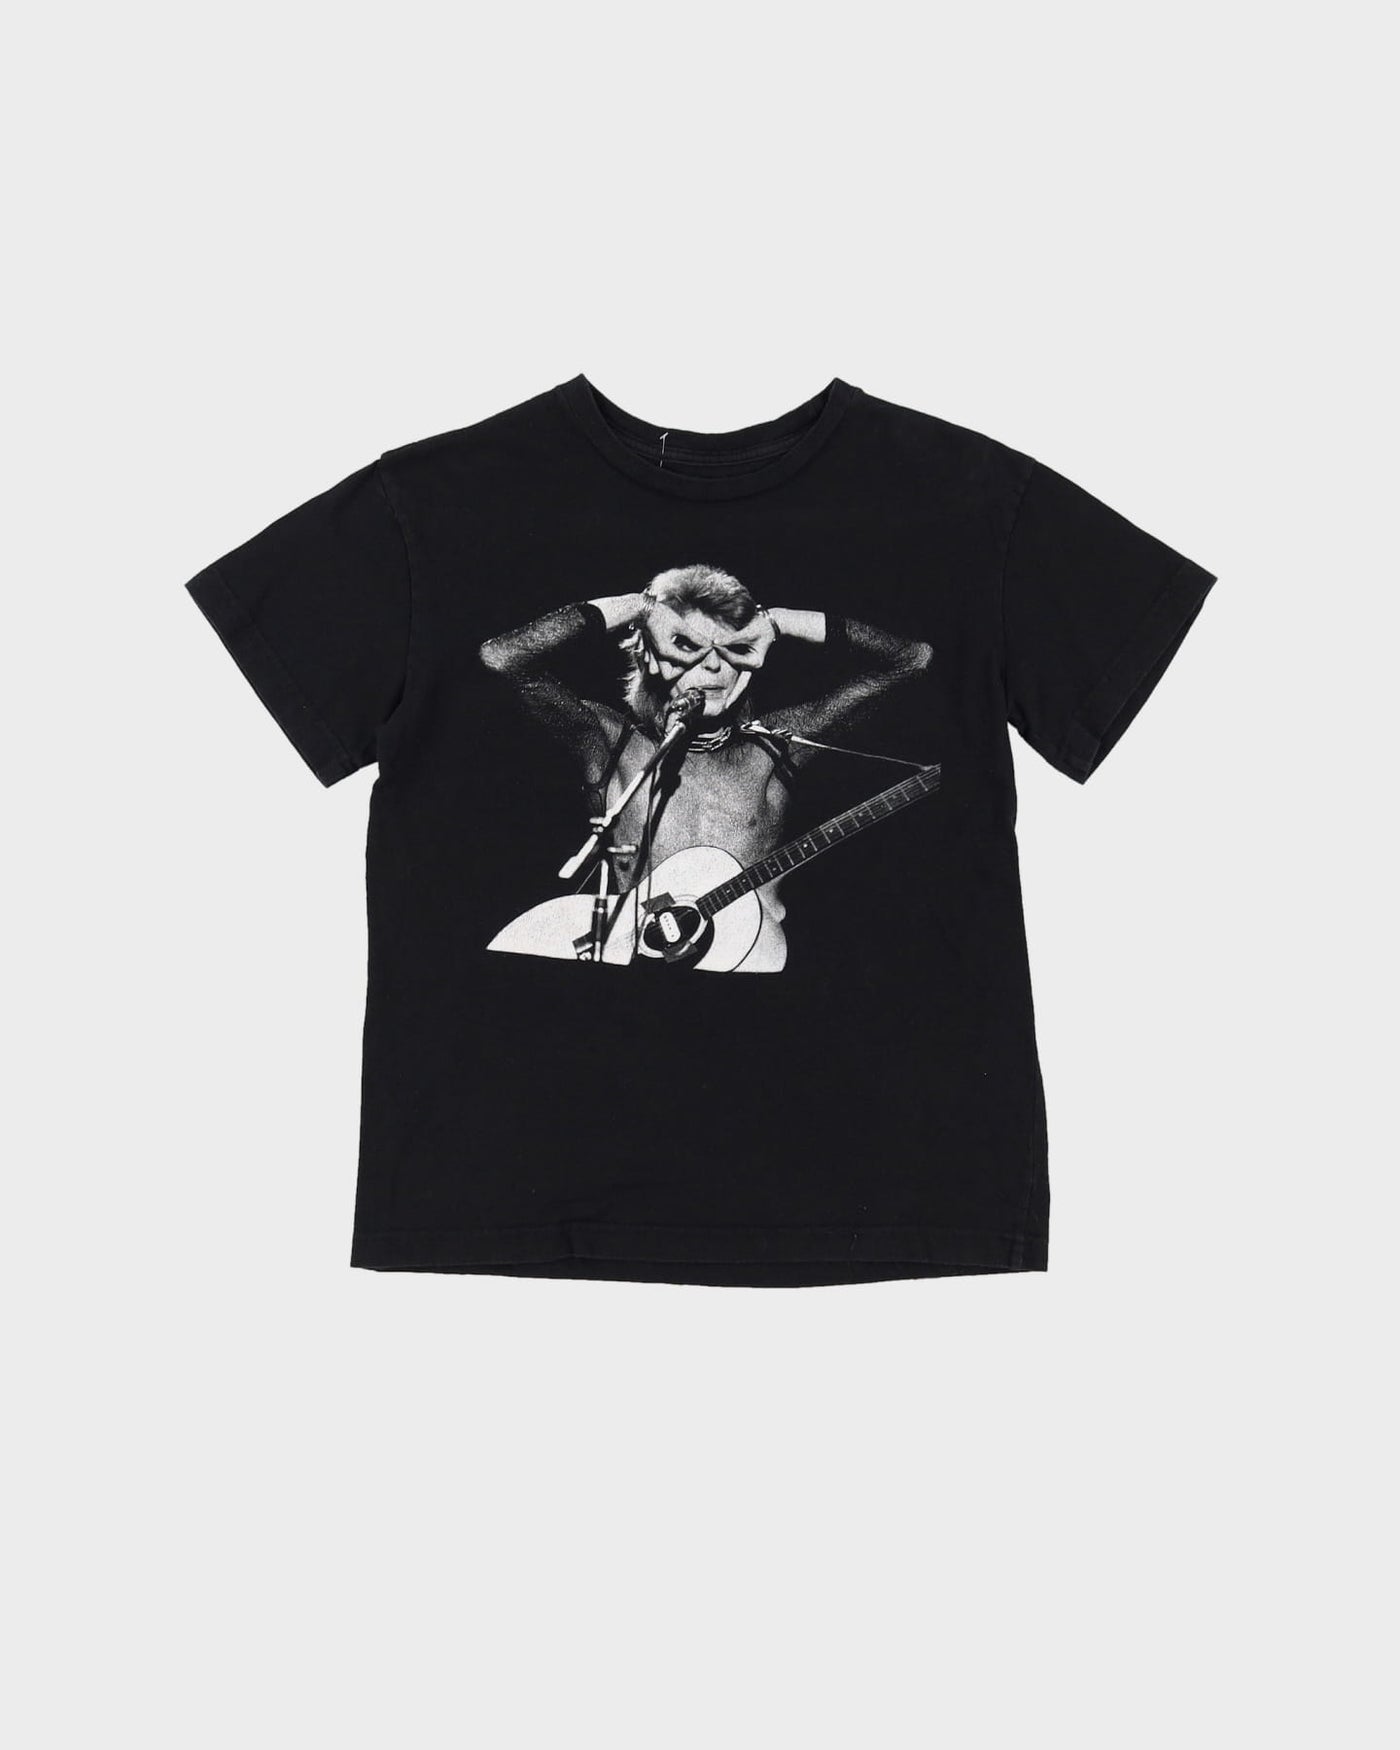 Vintage David Bowie Graphic Black Band T-Shirt - M